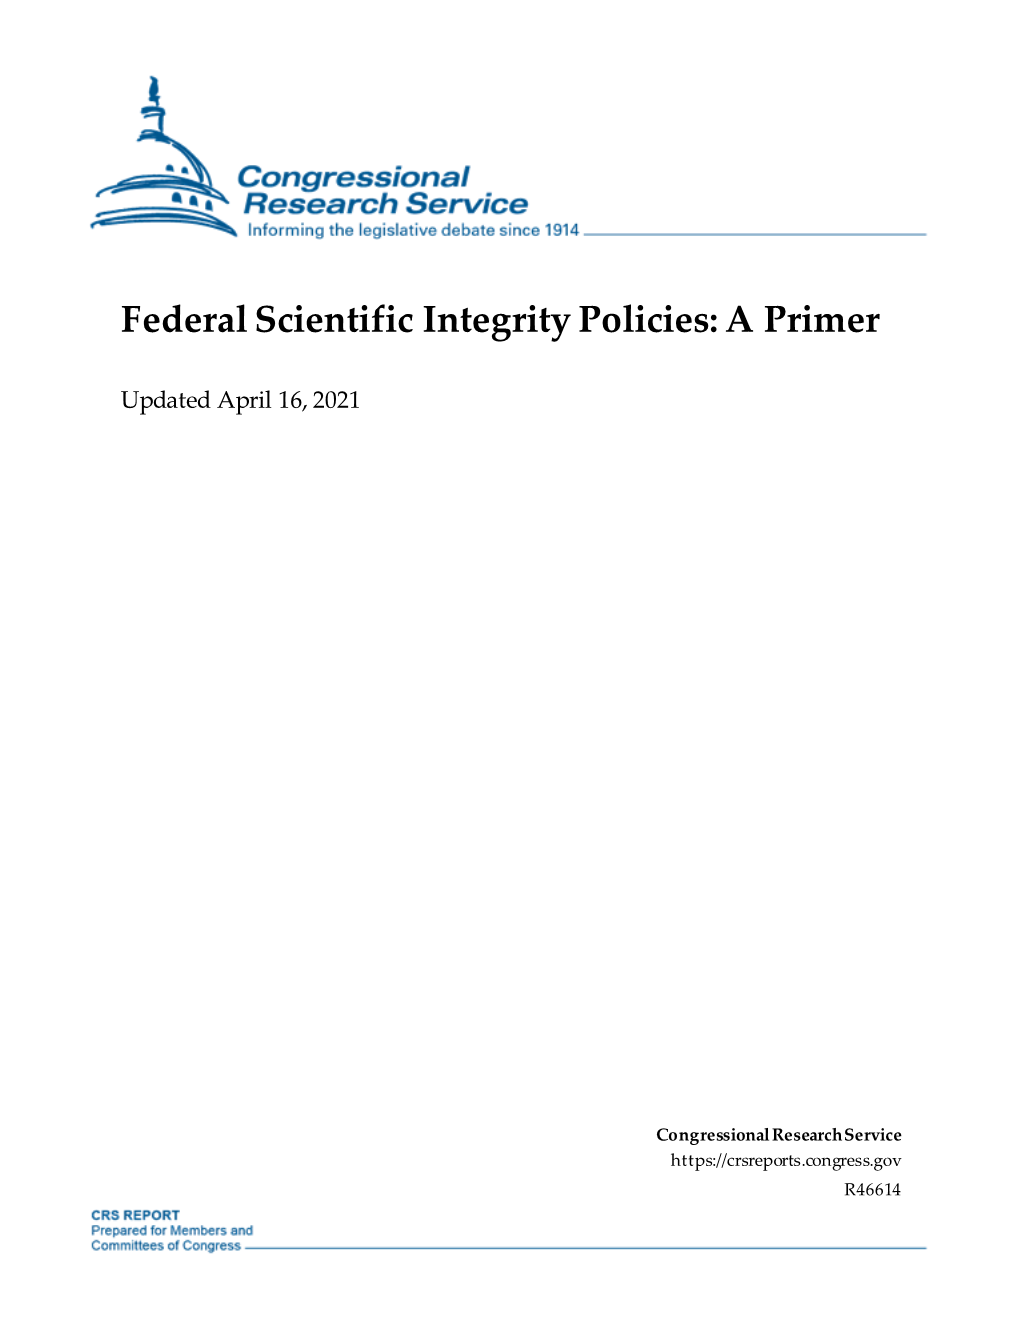 Federal Scientific Integrity Policies: a Primer